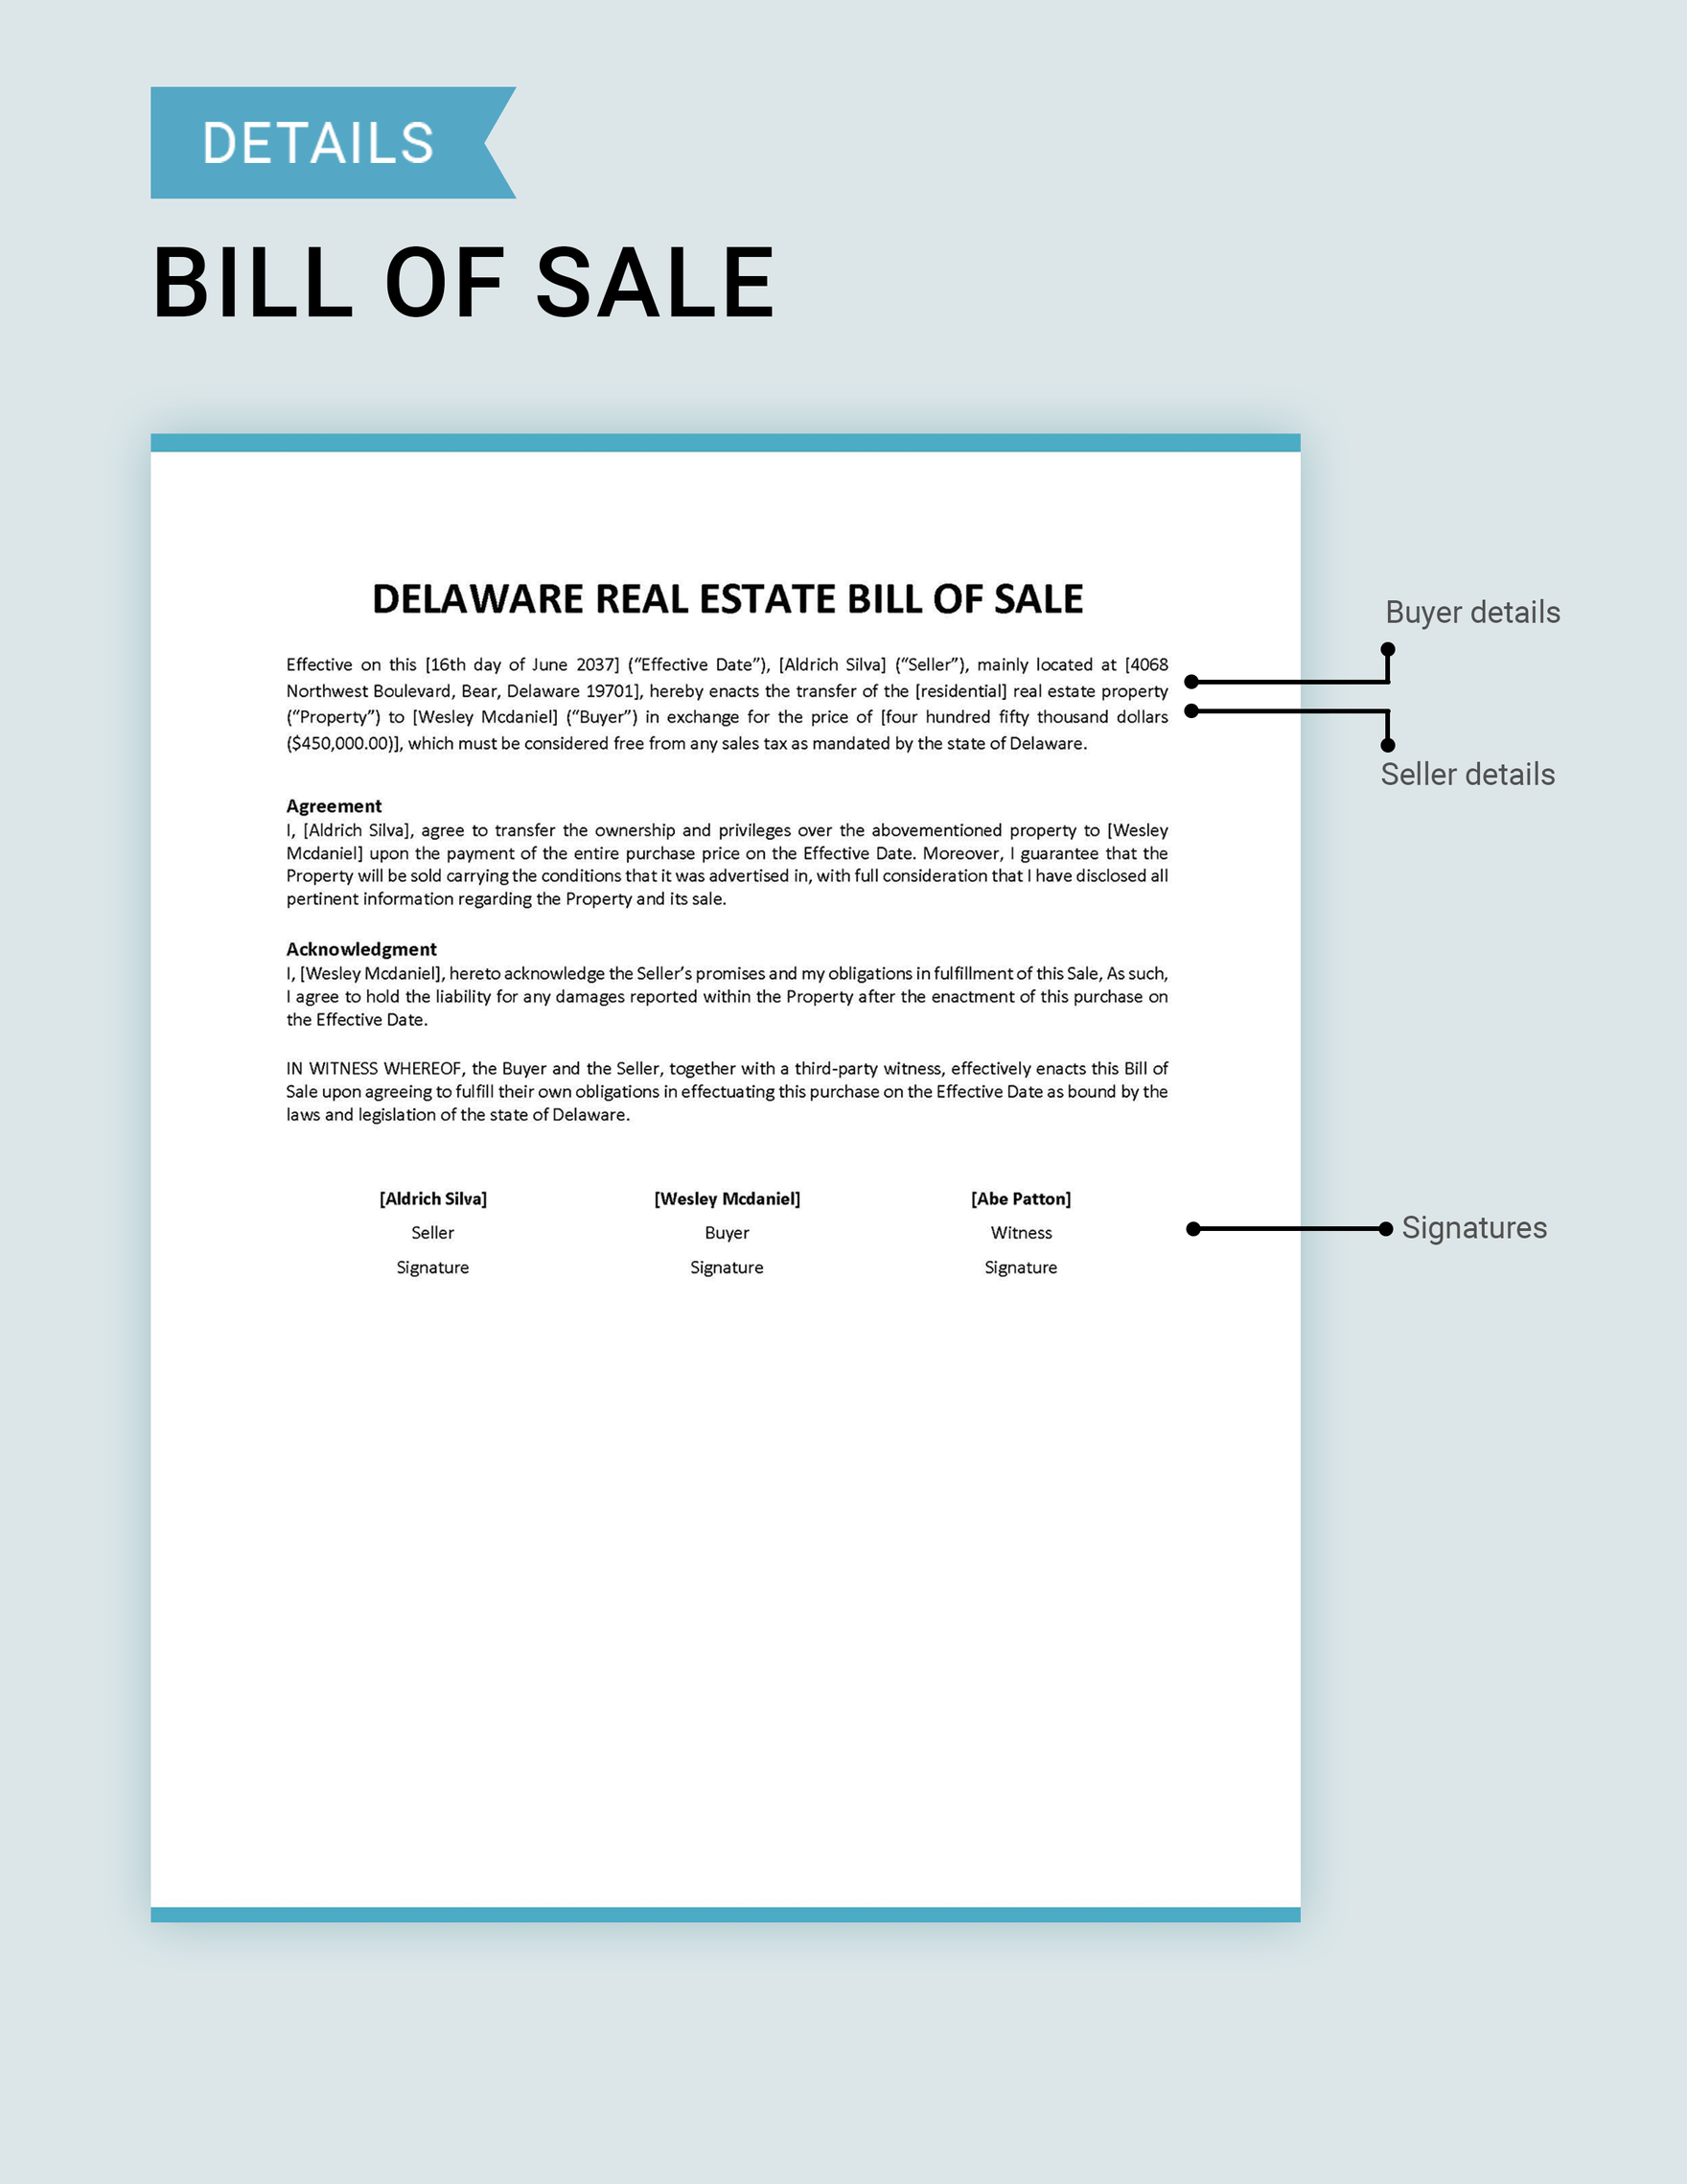 Delaware Real Estate Bill of Sale Template